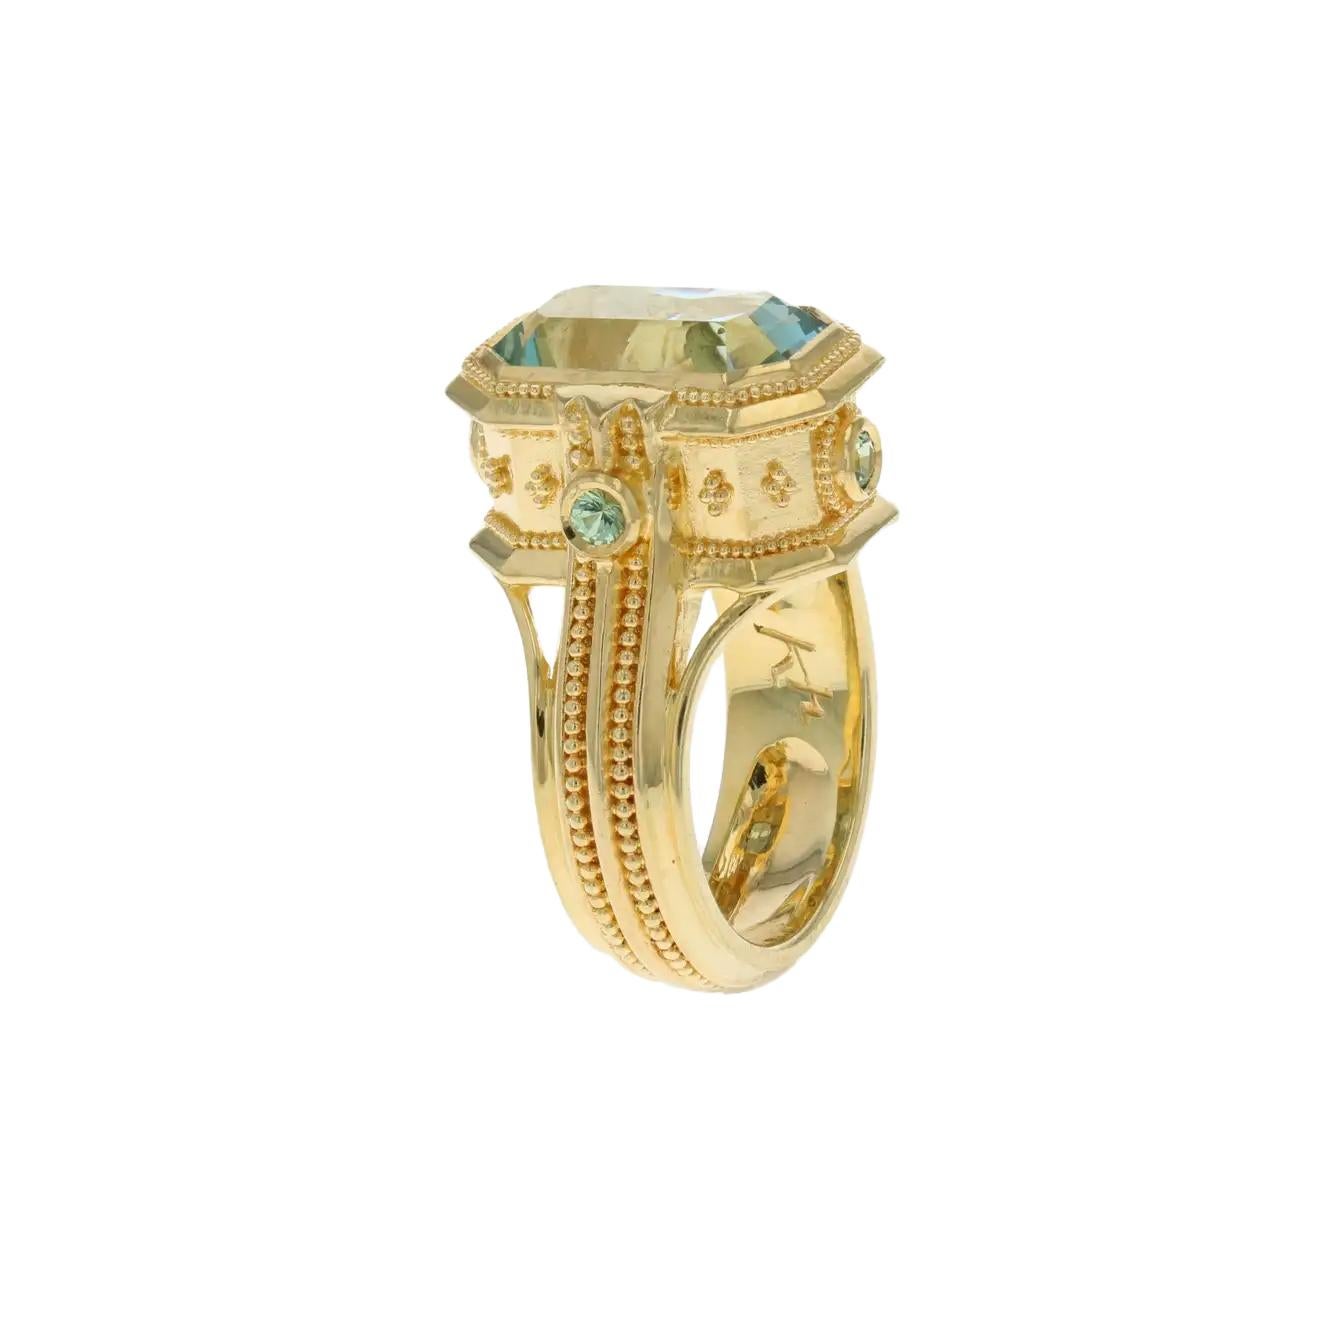 Contemporary 18 Karat Gold Granulation Kent Raible Aquamarine Cocktail Ring with Green Garnet